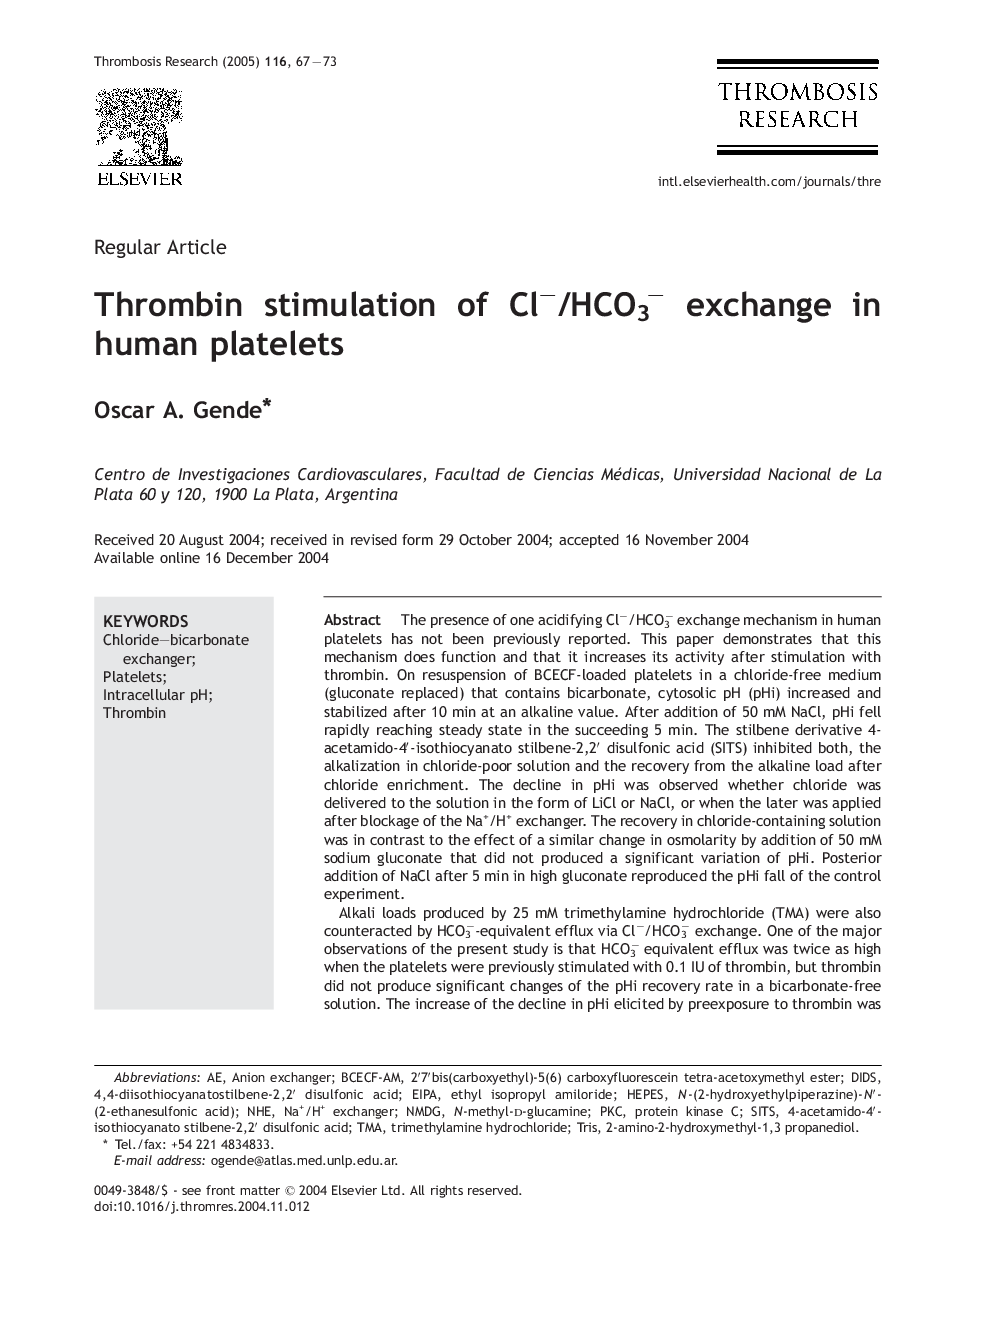 Thrombin stimulation of Clâ/HCO3â exchange in human platelets